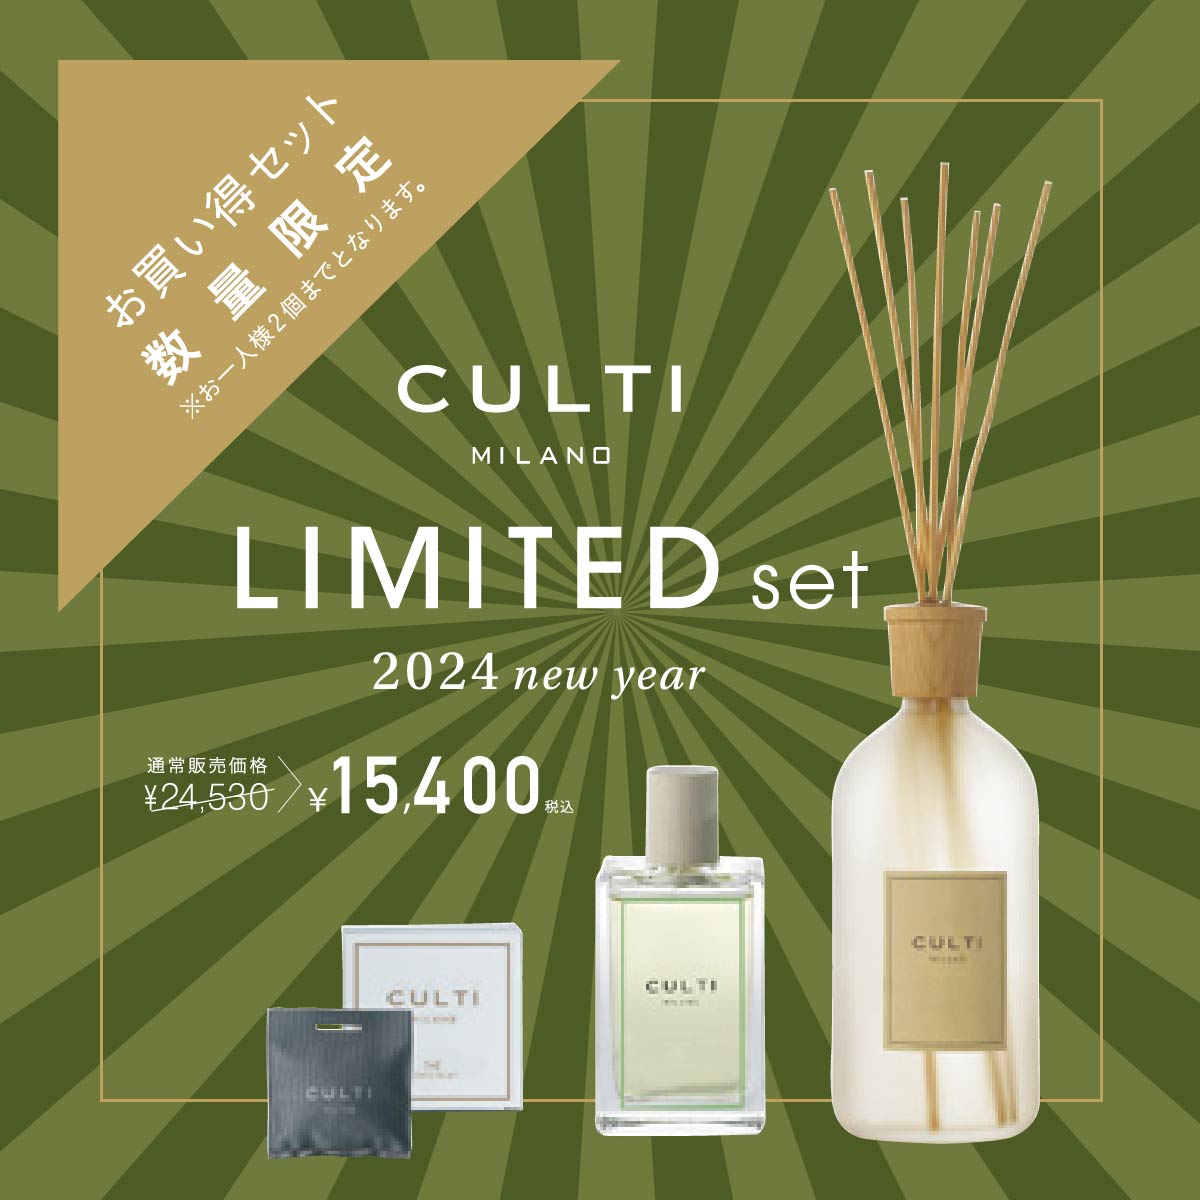 【CULTI/2024 new year LEMITED SET】1/2販売開始！